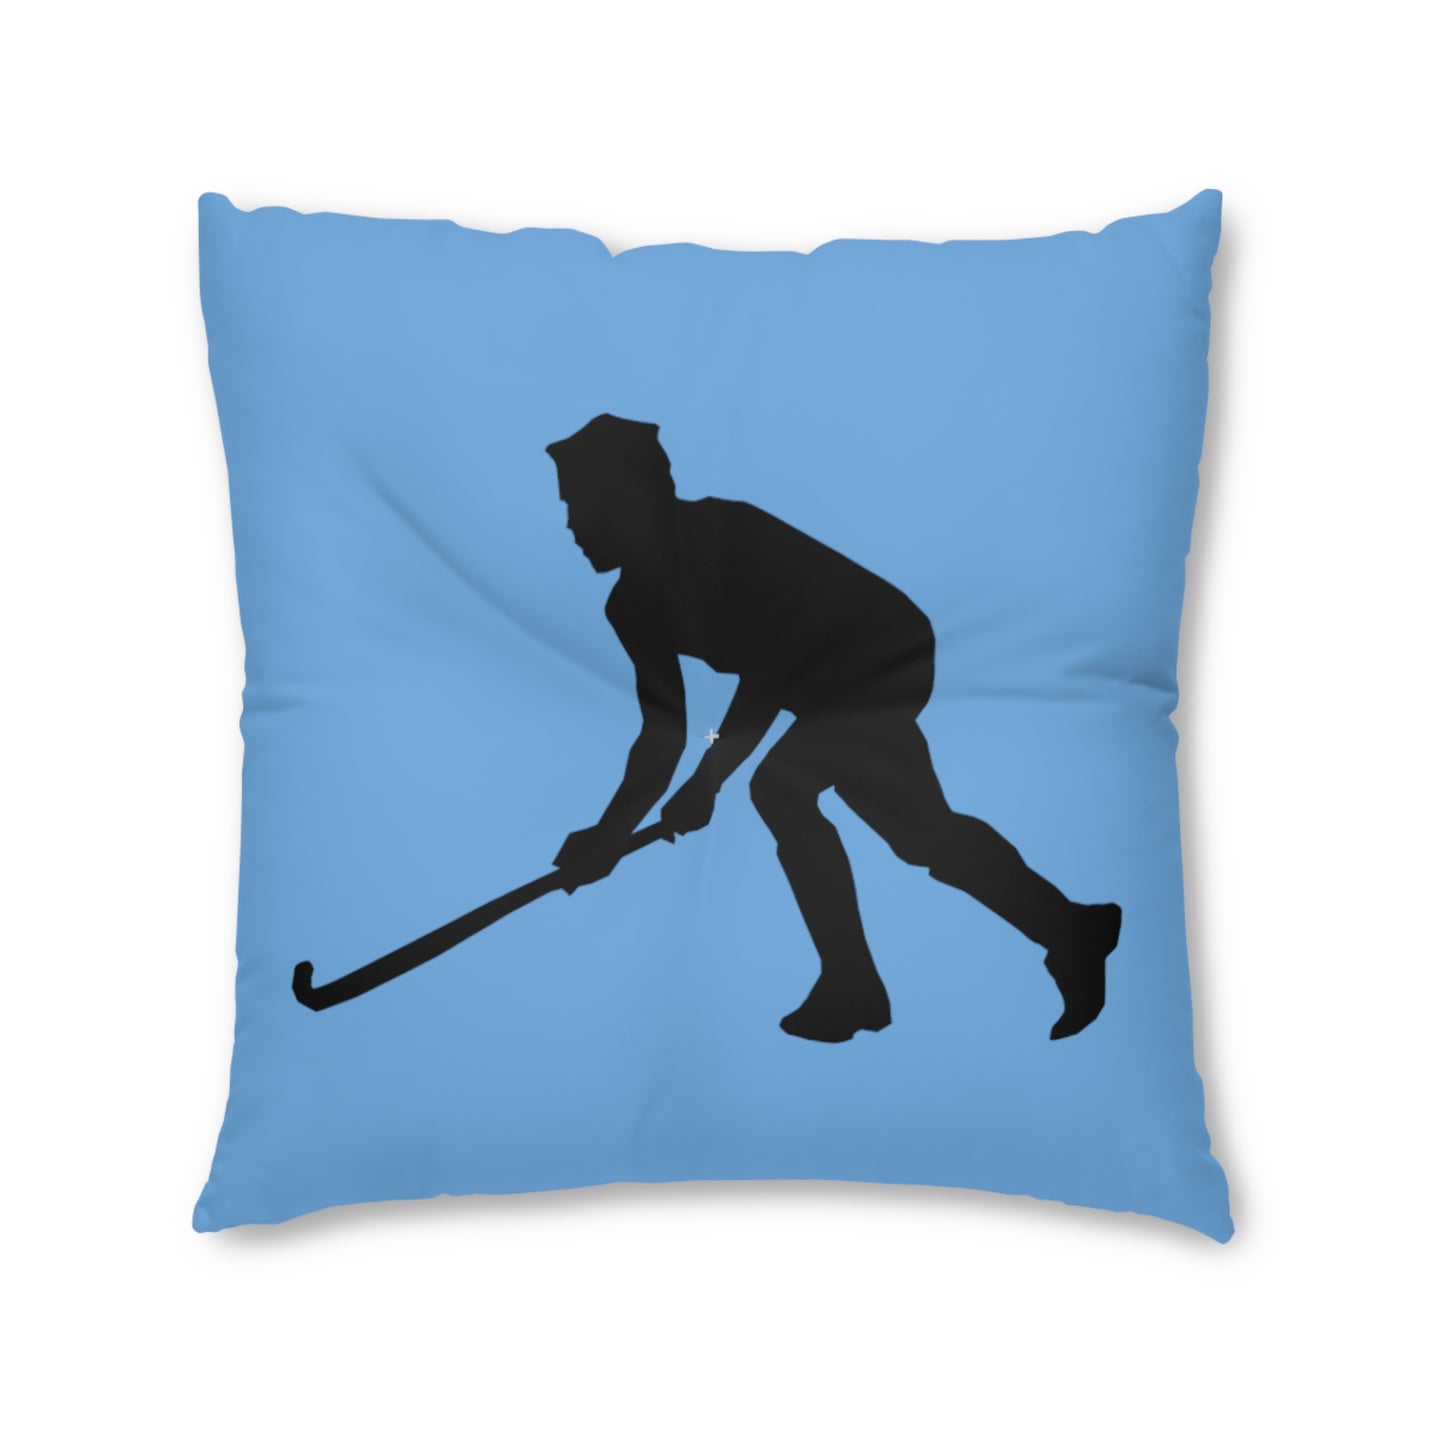 Tufted Floor Pillow, Square: Hockey Lite Blue